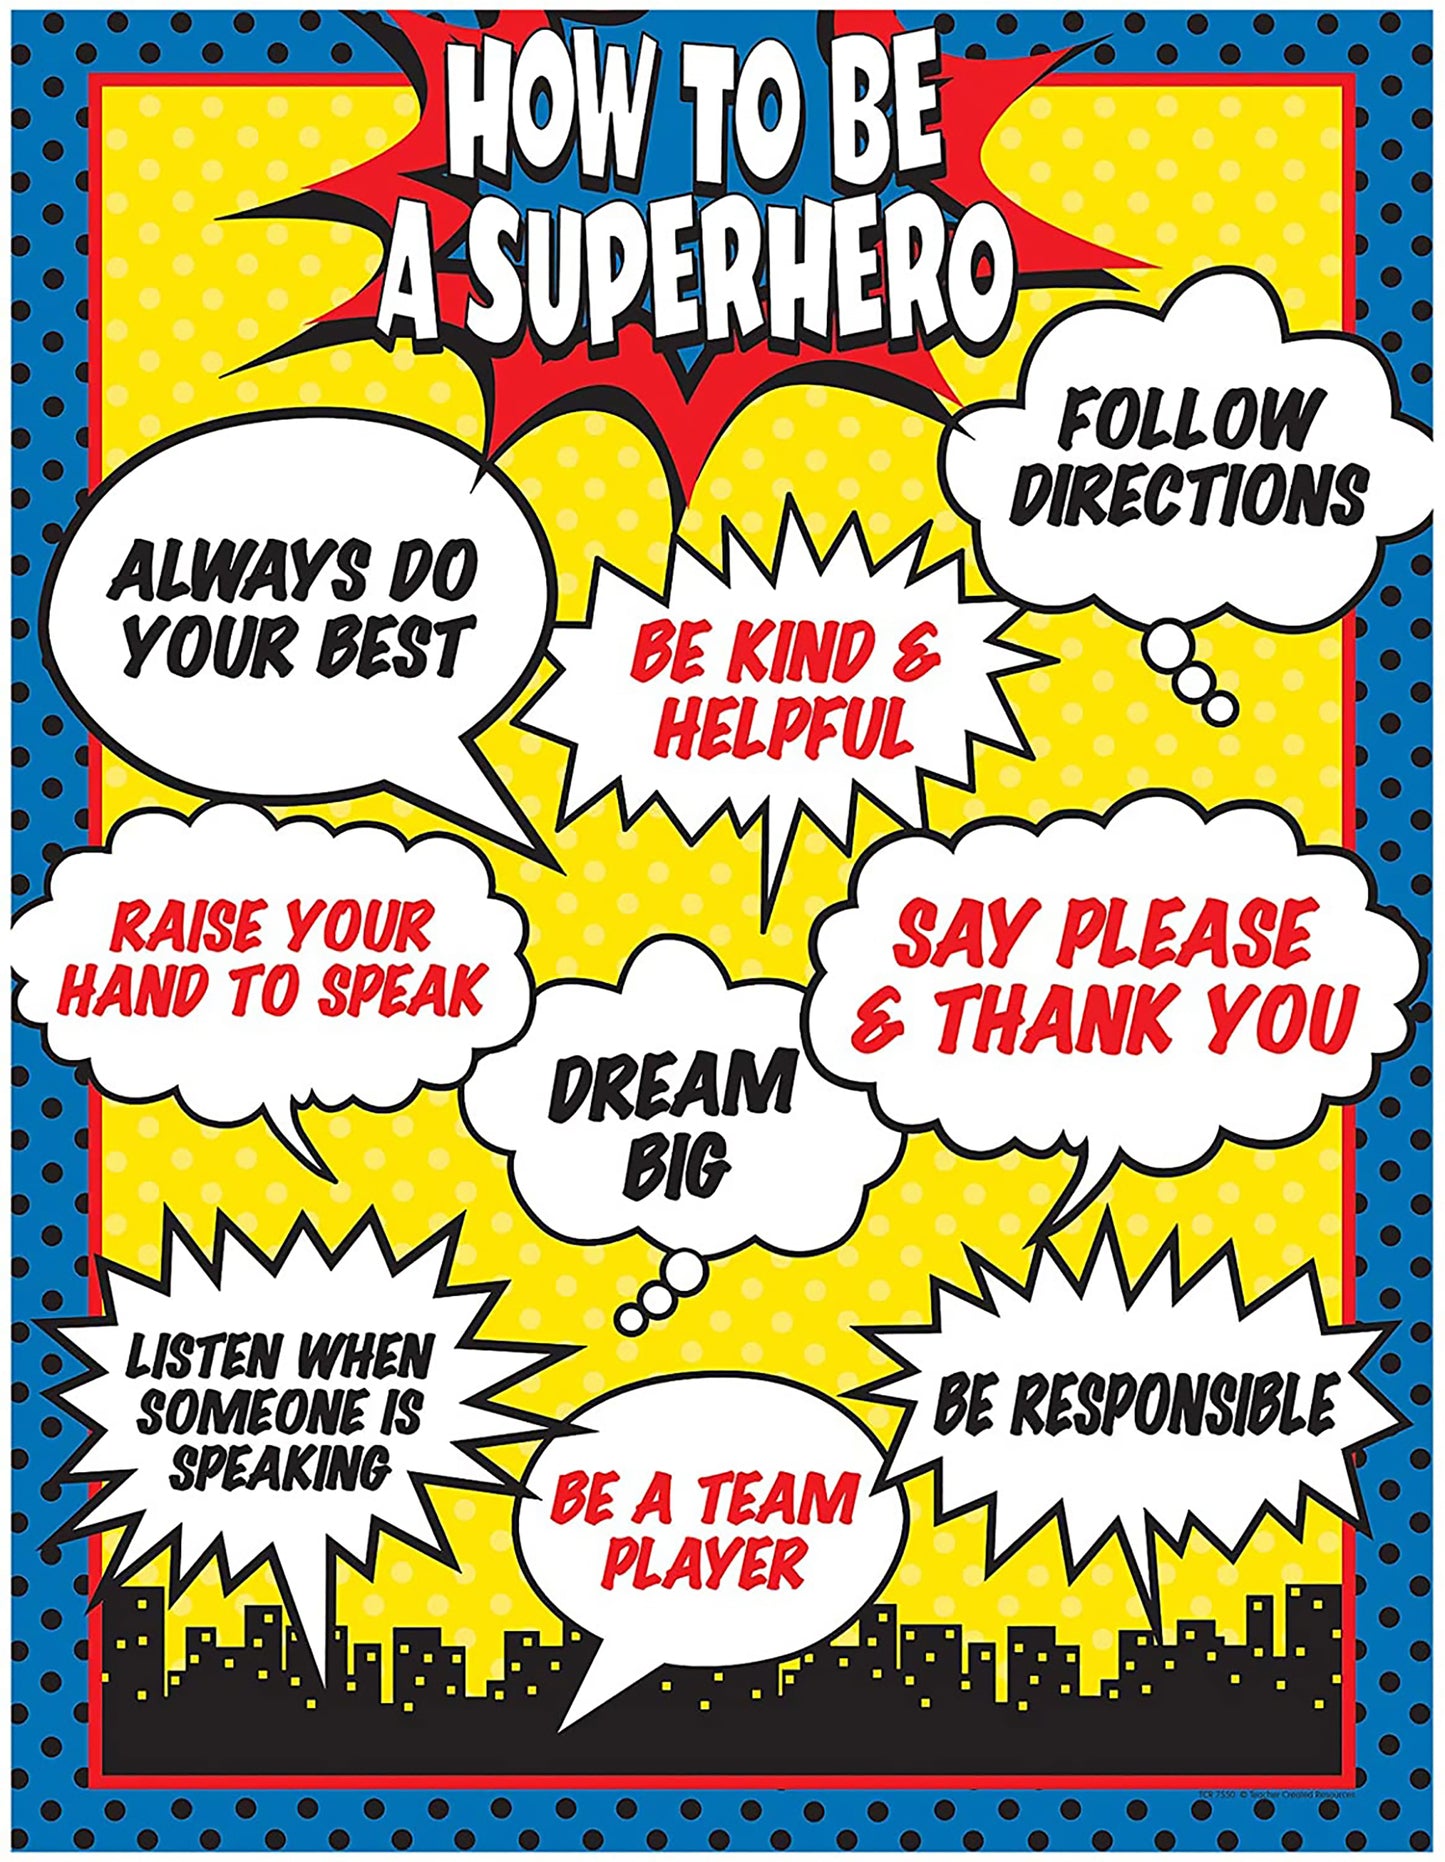 How to be a superhero